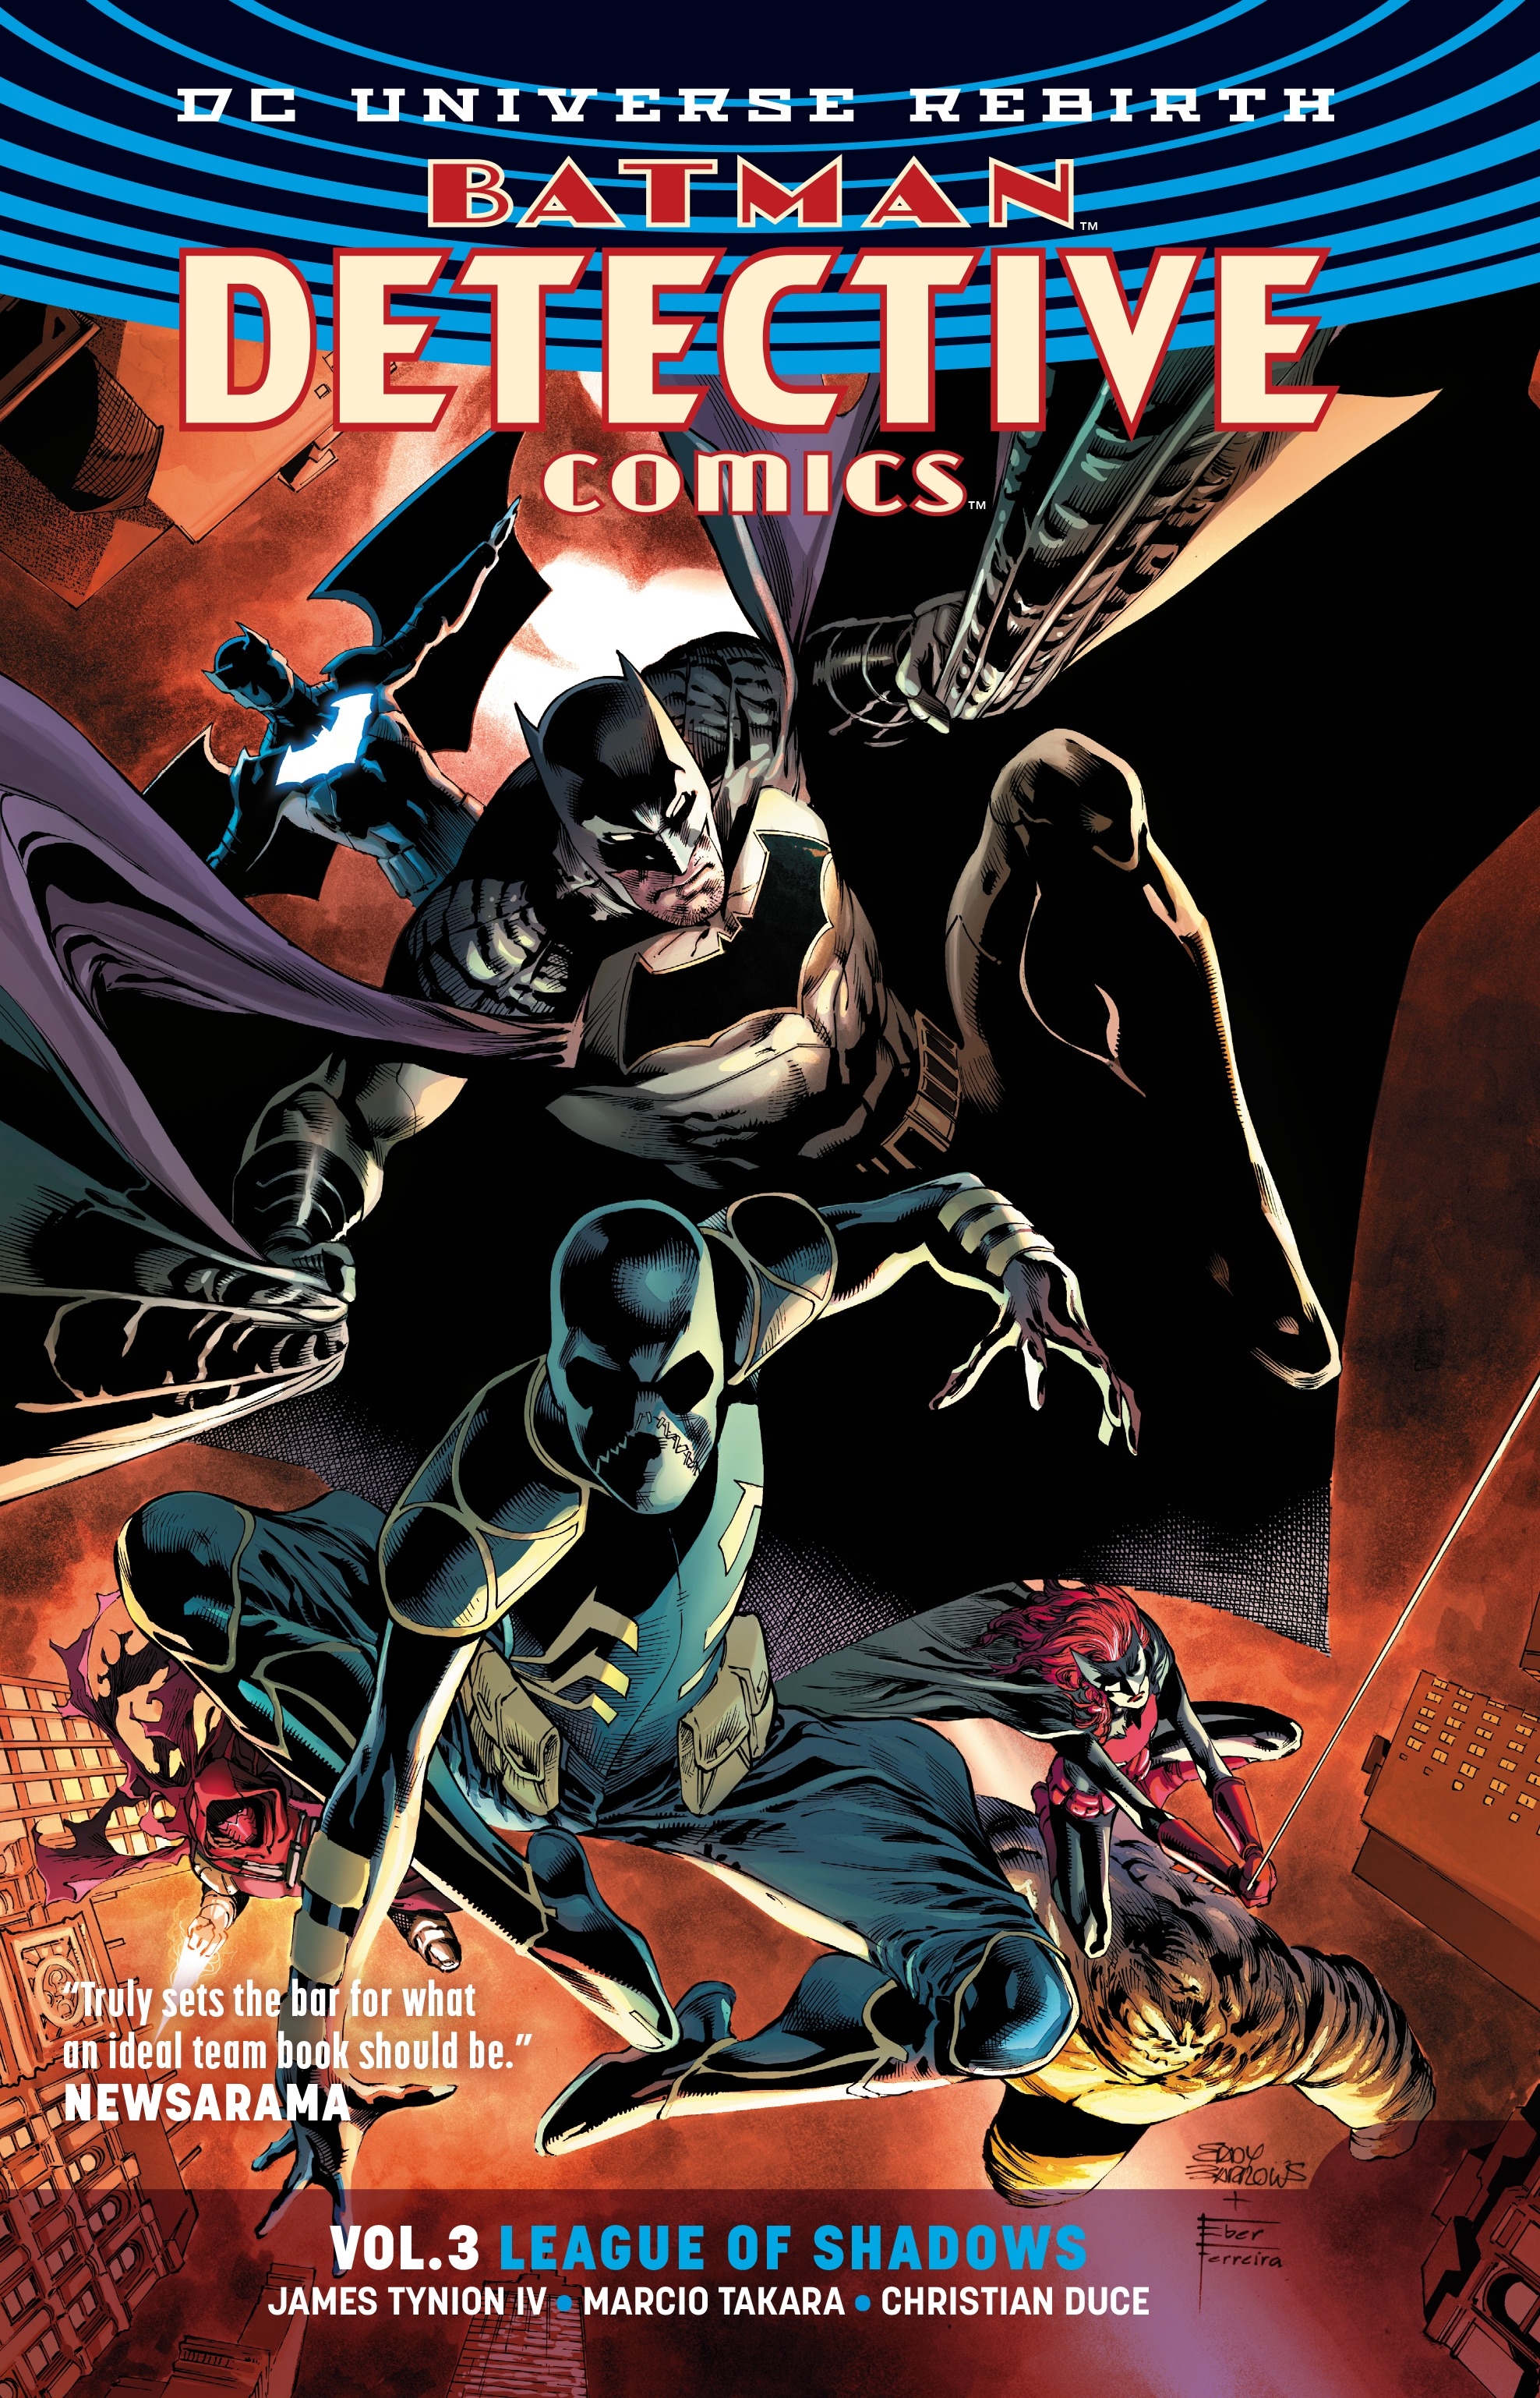 Batman Detective Comics Vol. 3 League Of Shadows (Rebirth) by James IV  Tynion - Penguin Books Australia